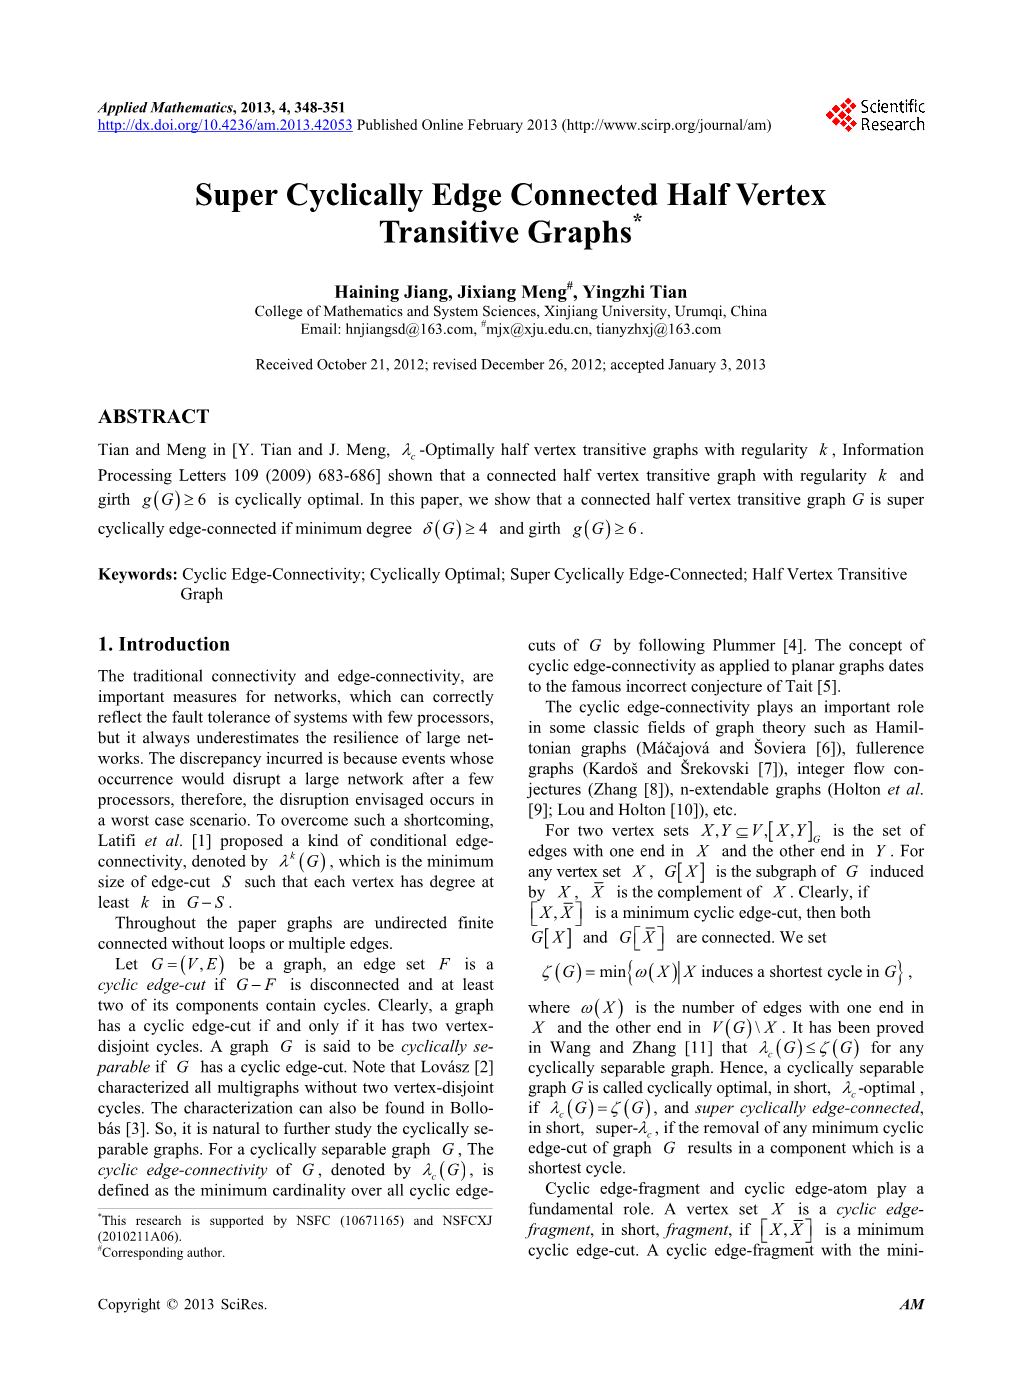 Super Cyclically Edge Connected Half Vertex Transitive Graphs*